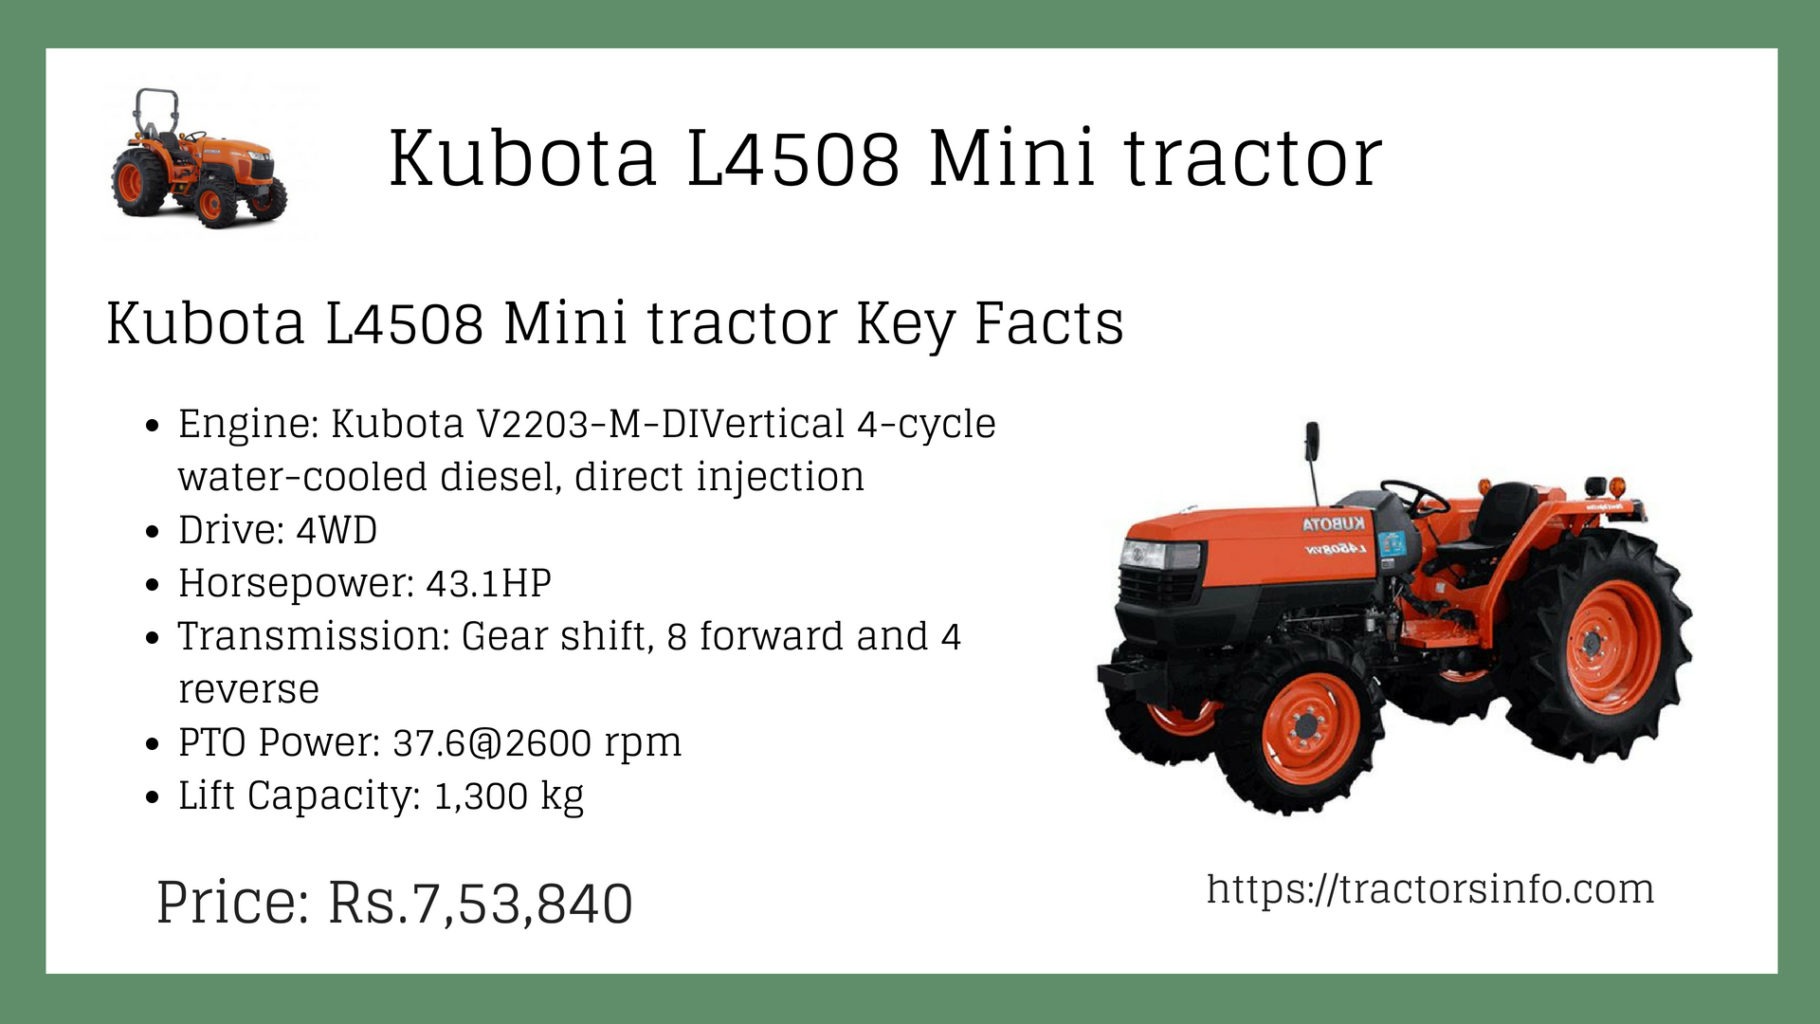 Kubota L4508 mini tractor